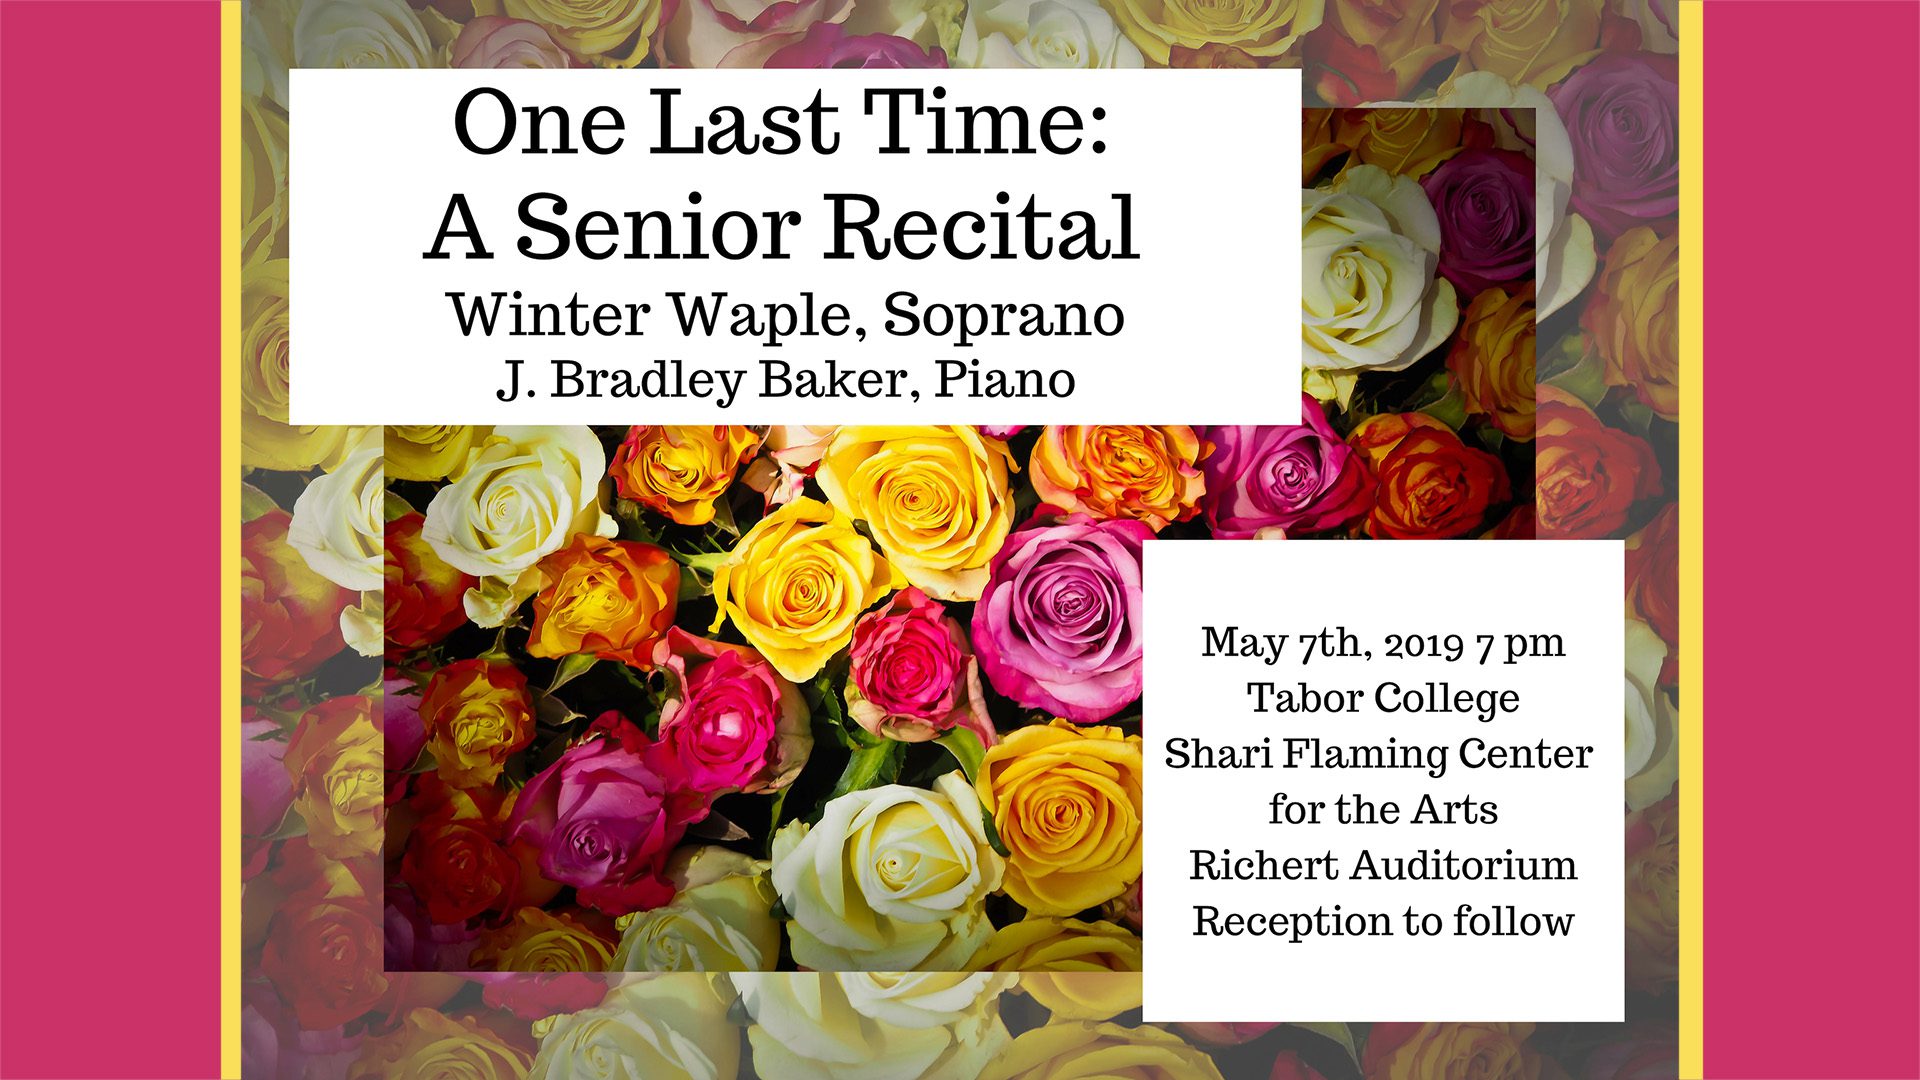 One Last Time: A Senior Recital concert poster